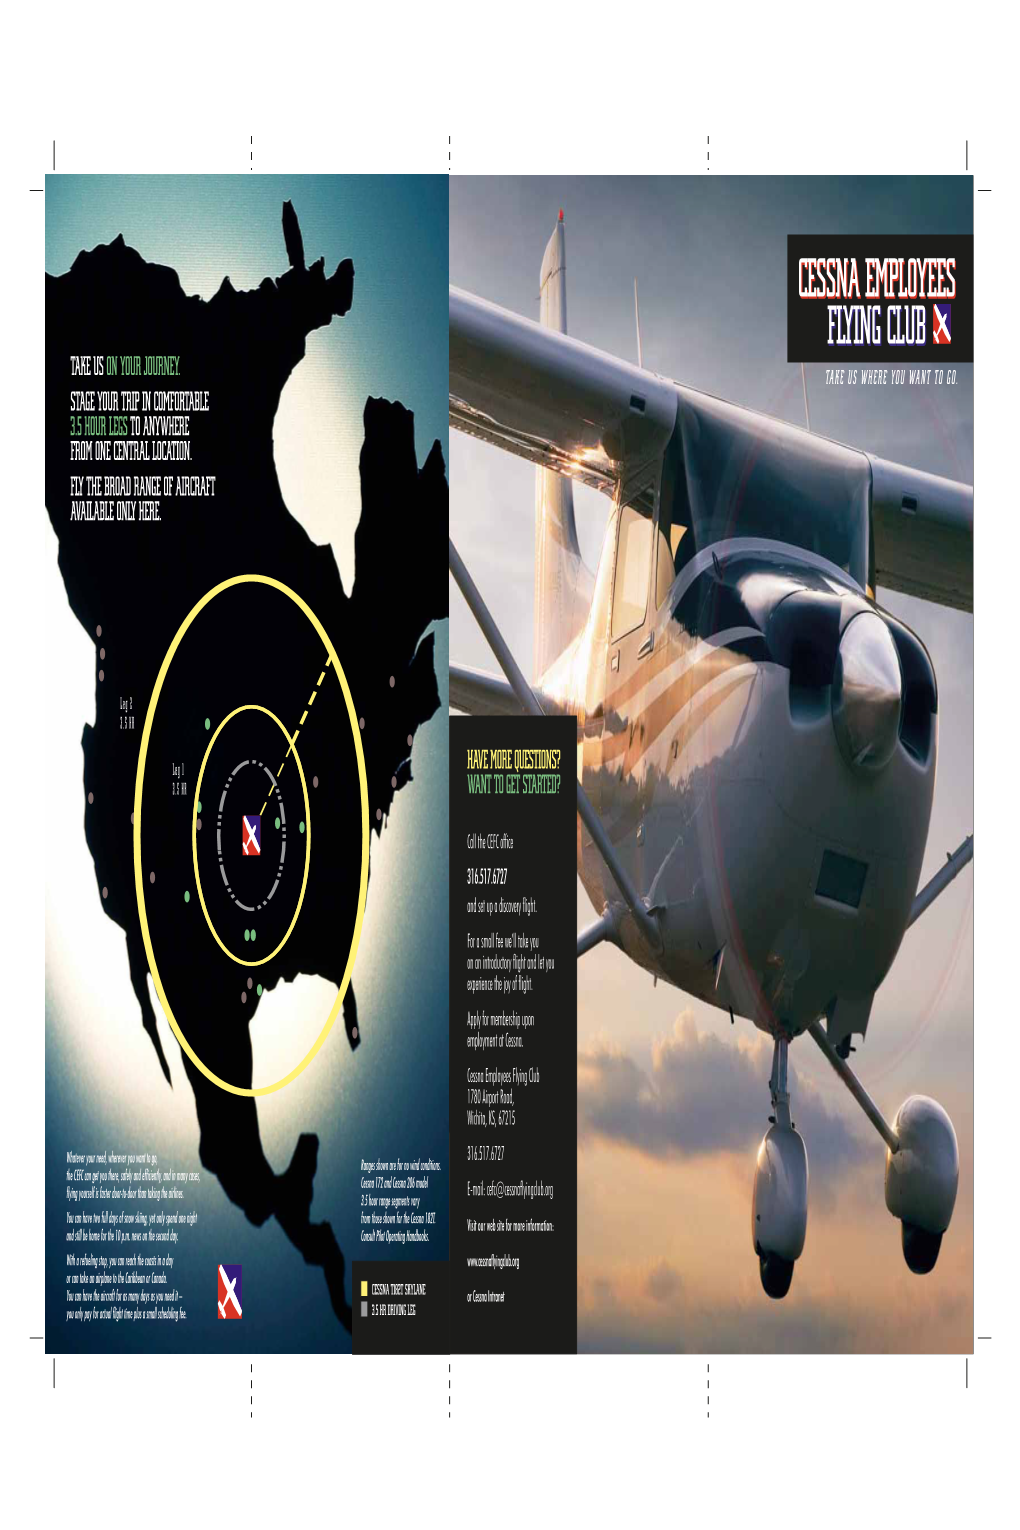 Cessna Employeesemployees Flyingflying Clubclub Take Us on Your Journey